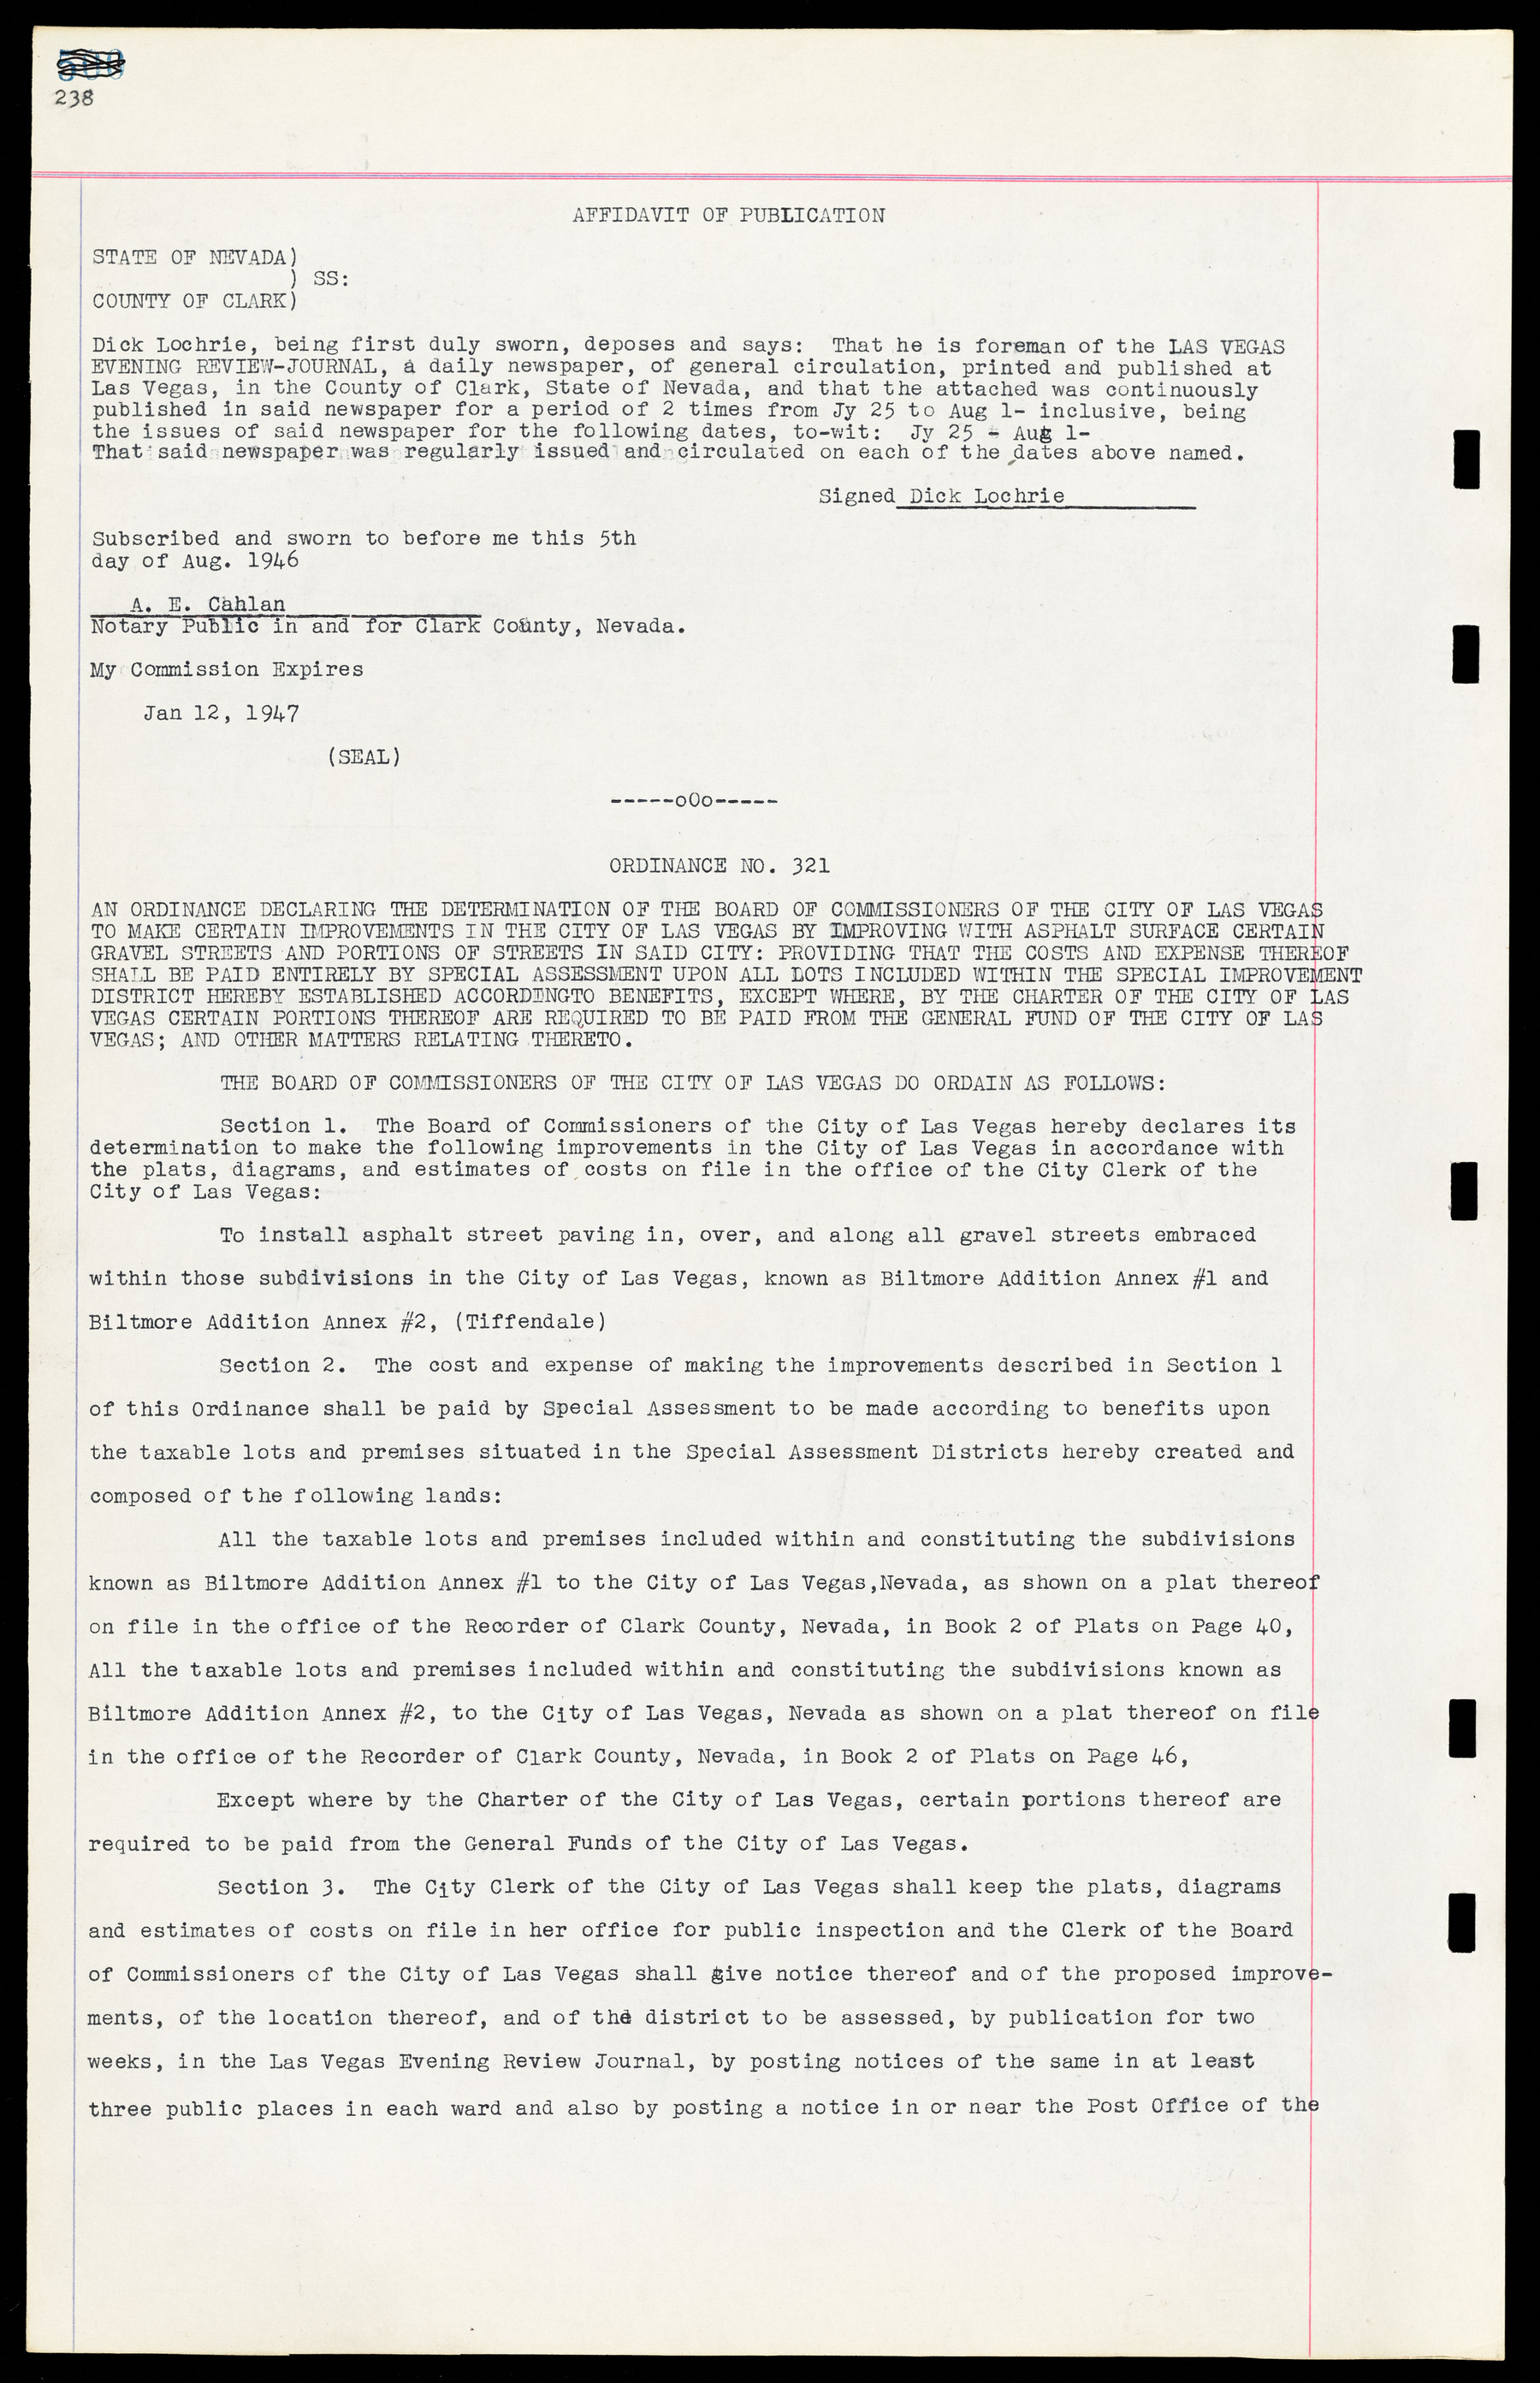 Las Vegas City Ordinances, March 31, 1933 to October 25, 1950, lvc000014-267